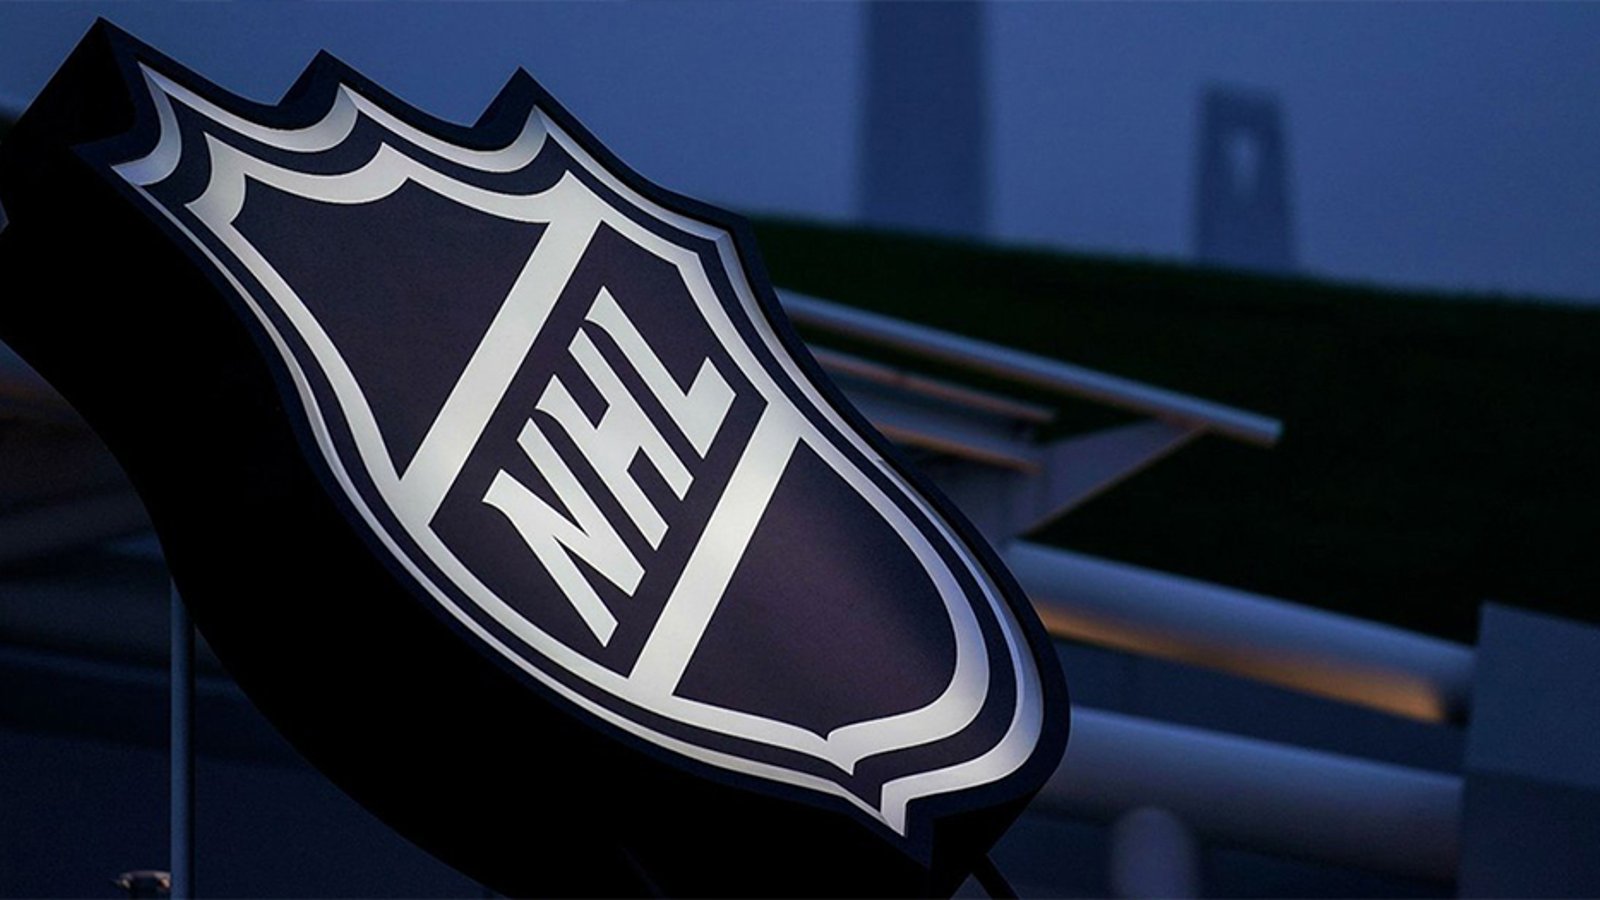 Report: NHL to suspend 2019-20 season